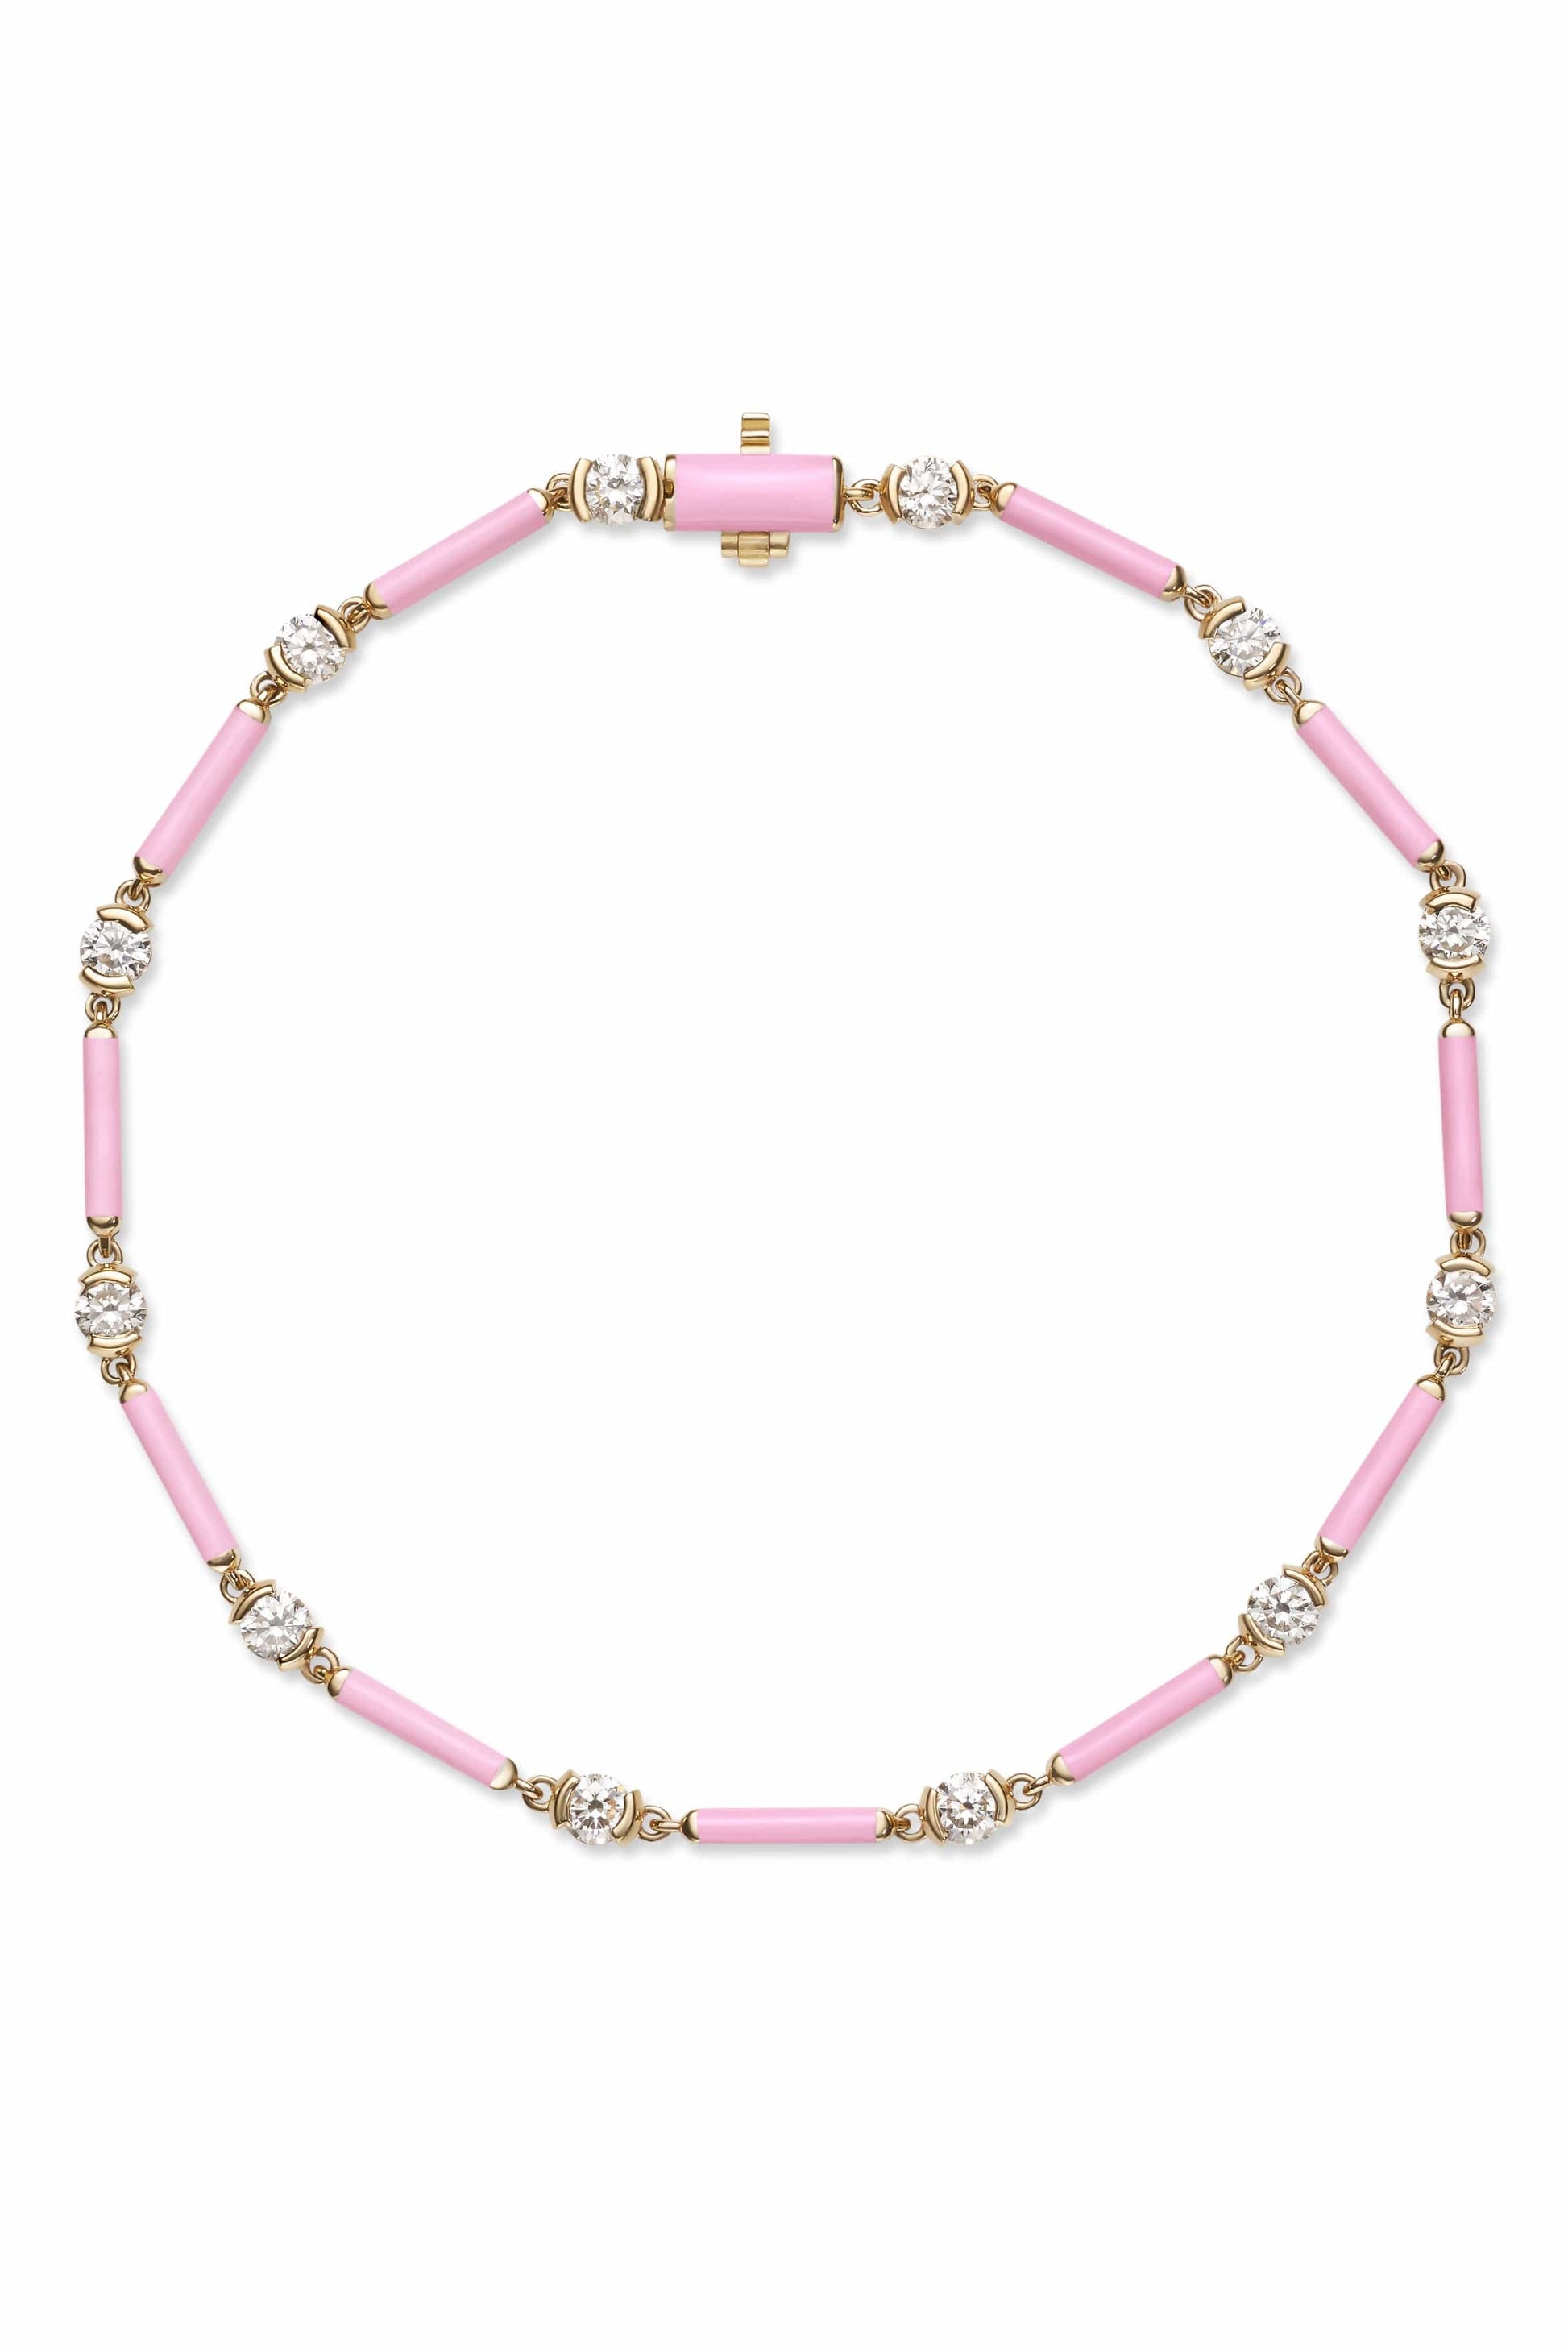 MELISSA KAYE-Marissa Pink Zea Linked Bracelet-